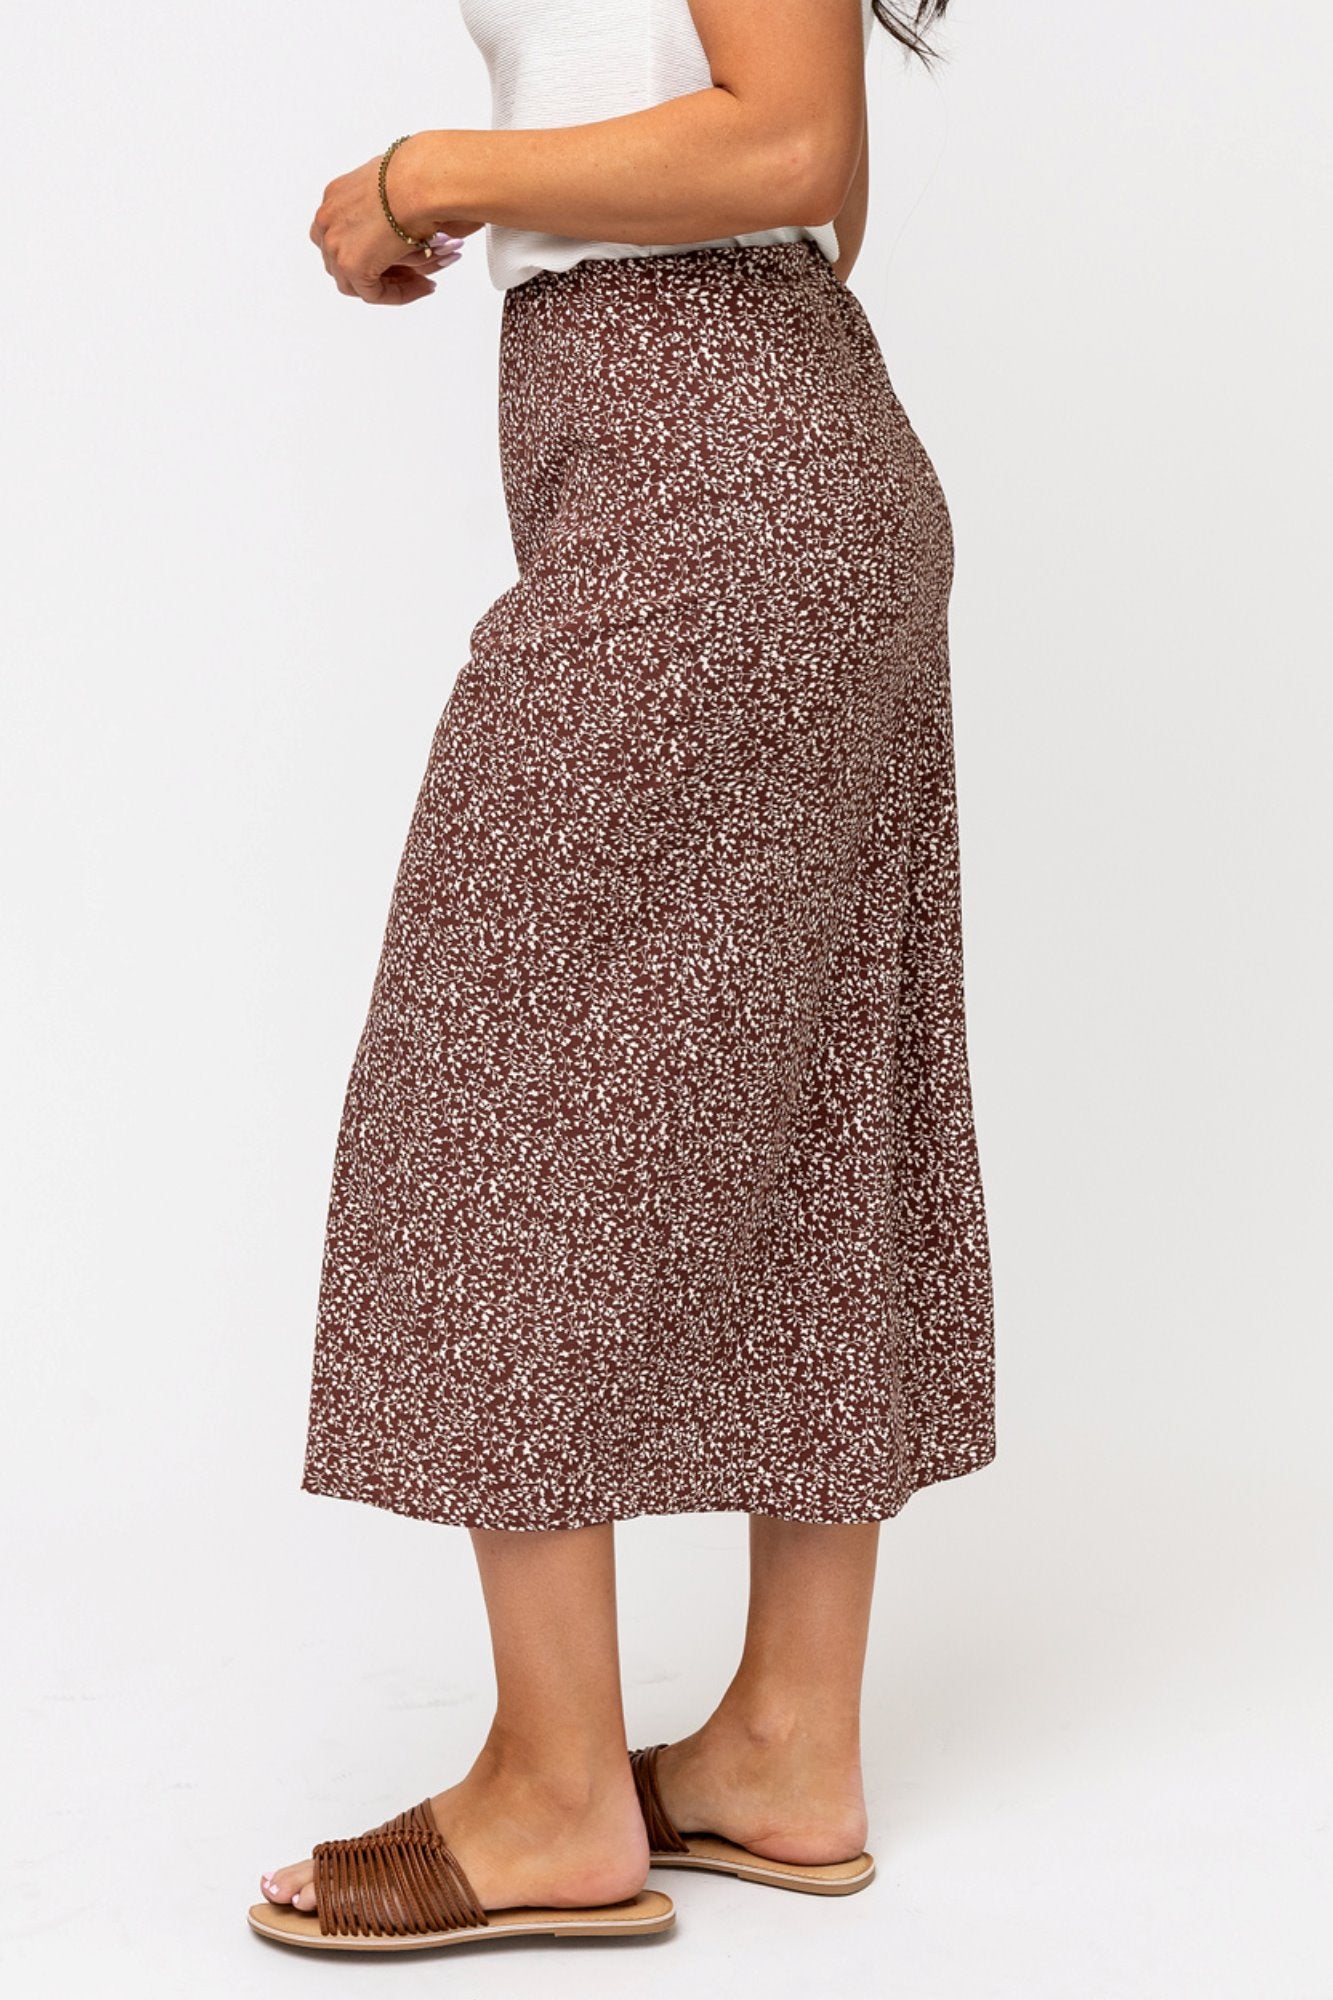 Kinsley Skirt in Brown Clothing Holley Girl 